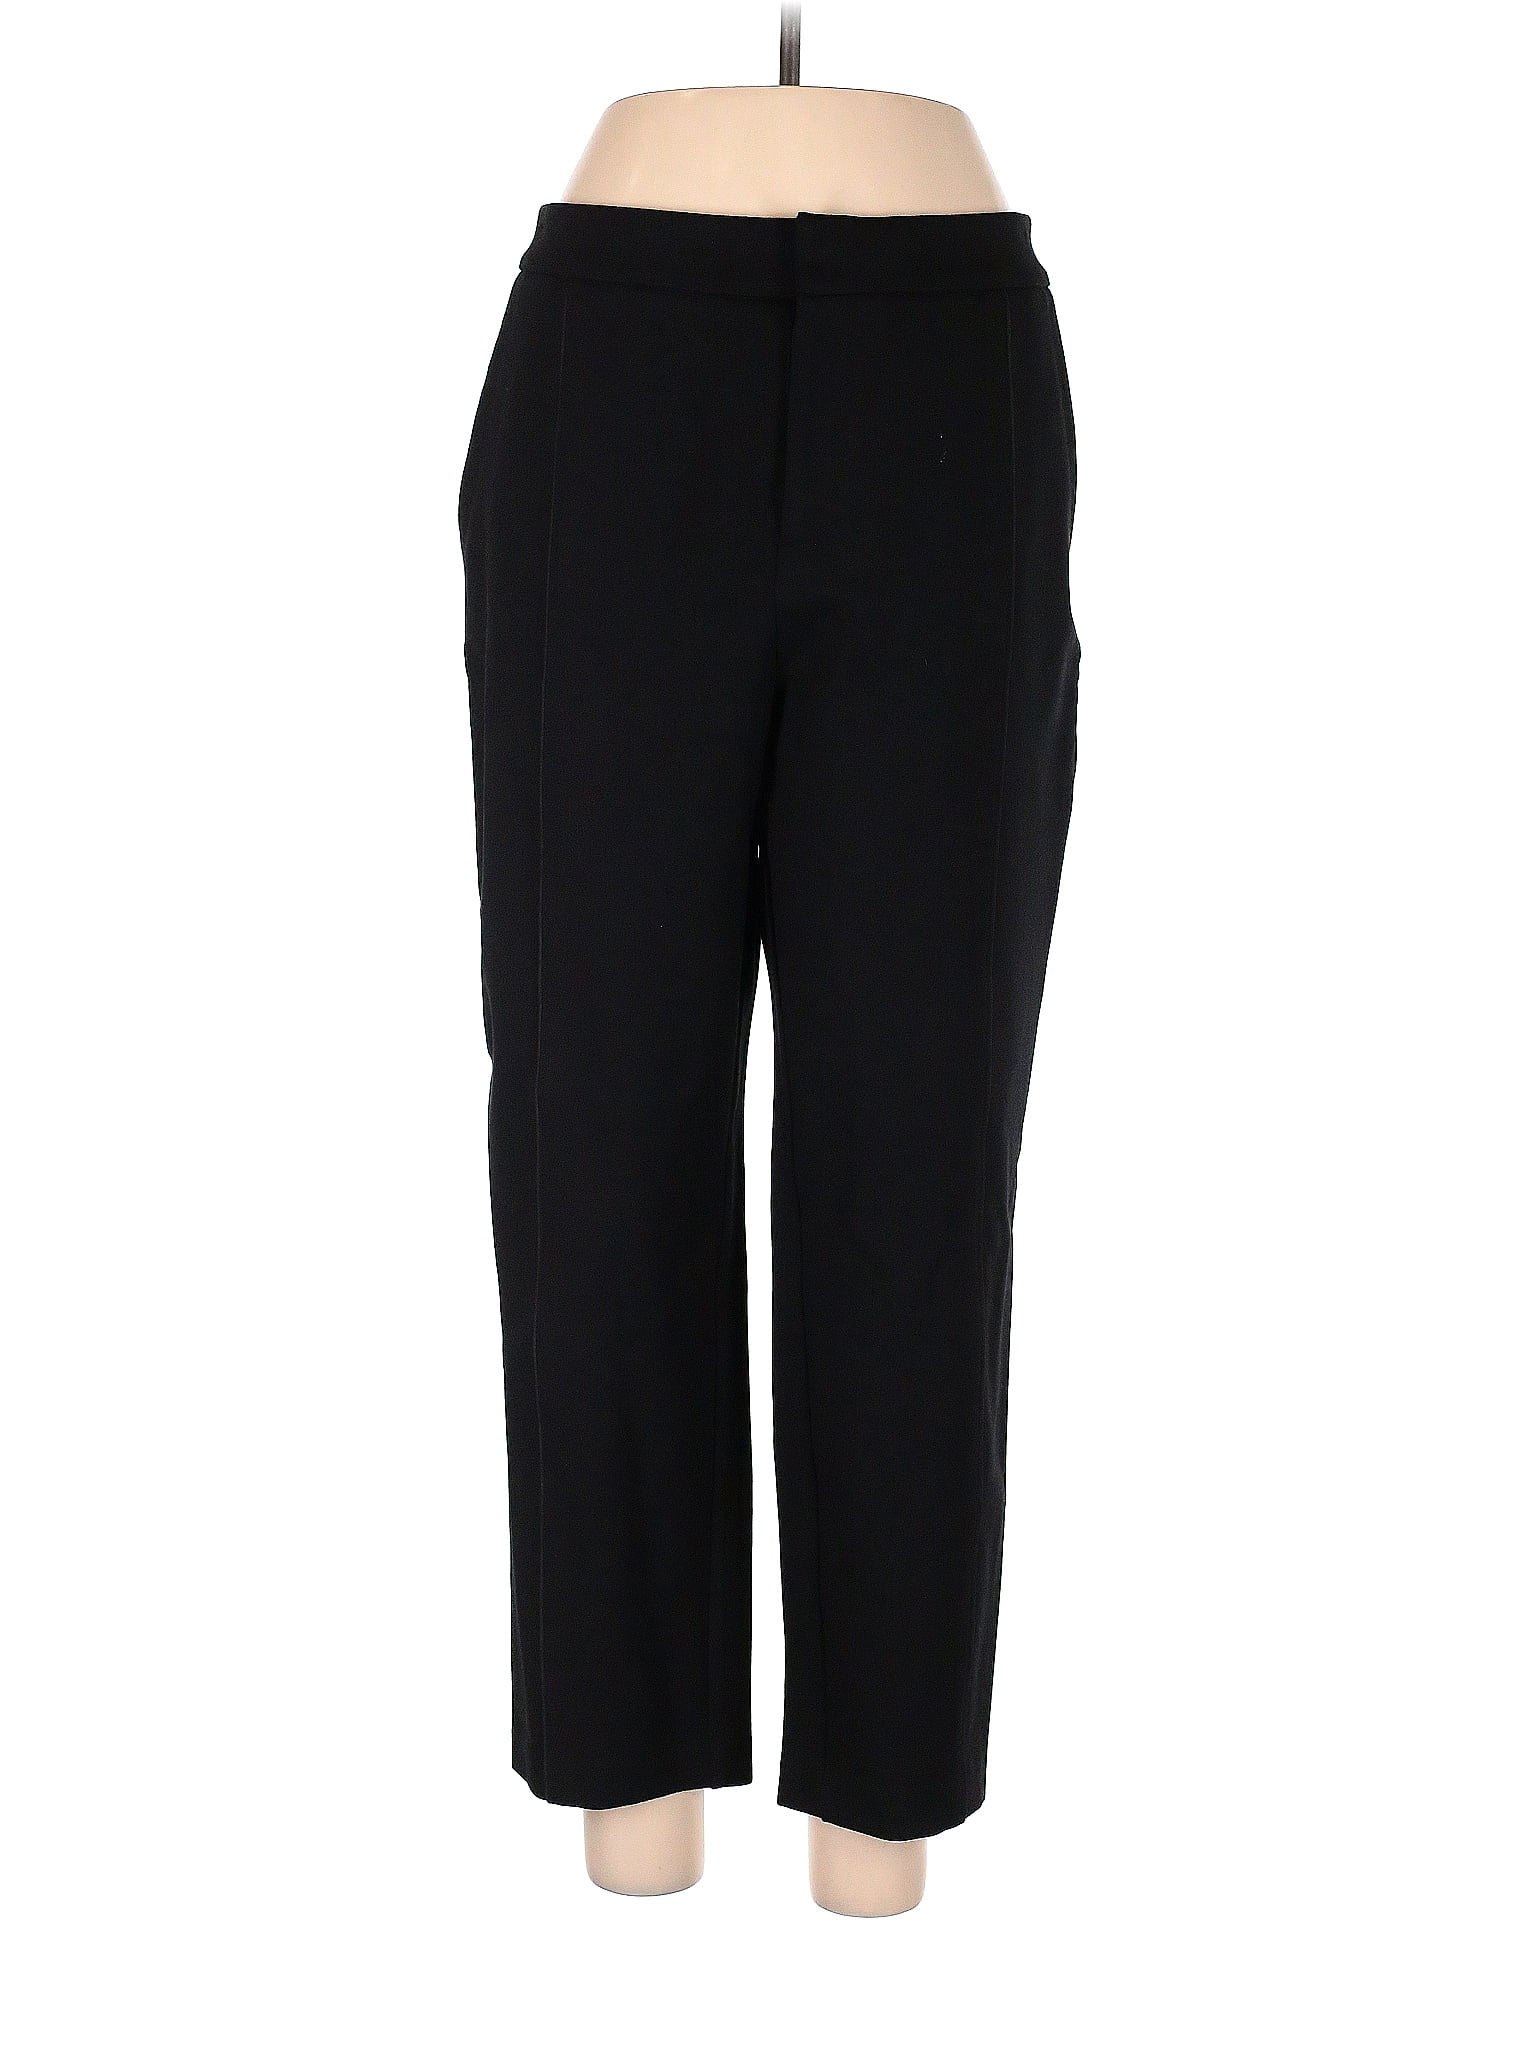 ELOQUII Polka Dots Black Dress Pants Size 16 (Plus) - 66% off | thredUP